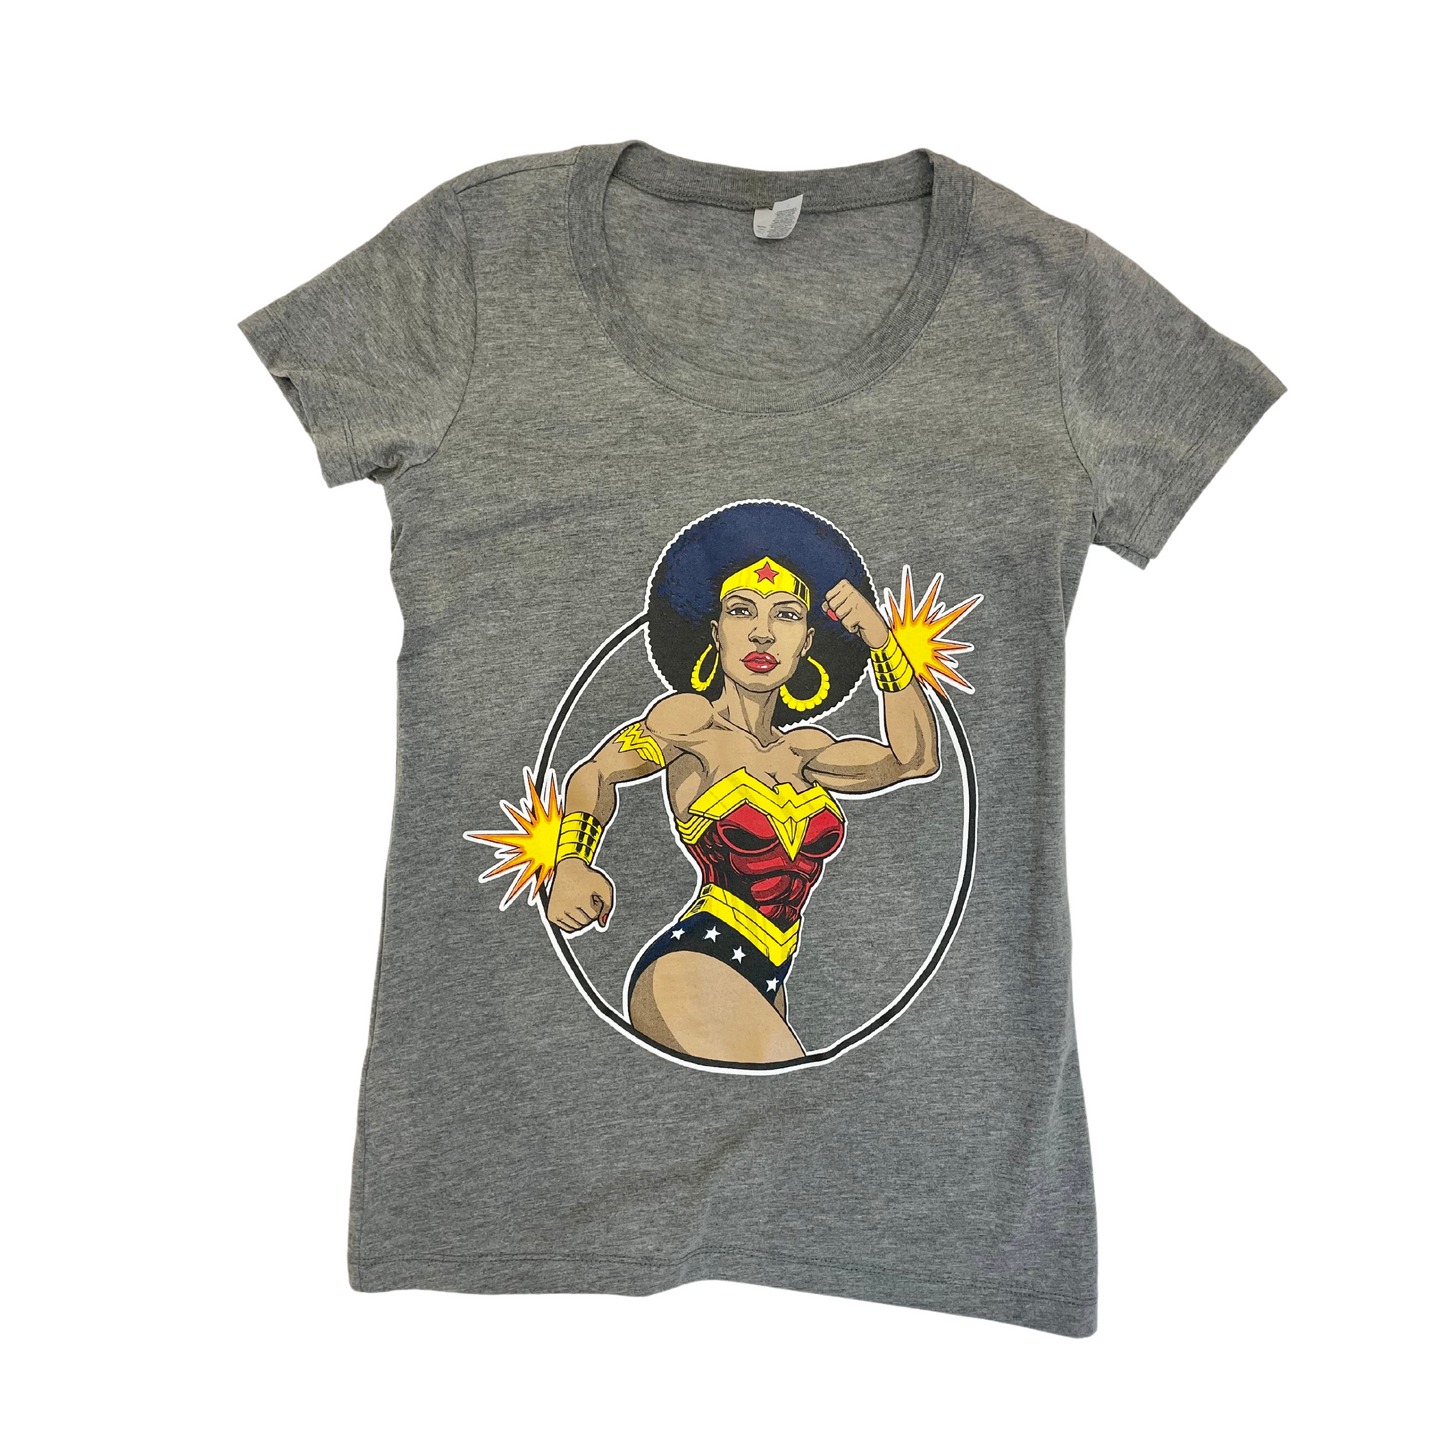 Black Wonder Woman Ladies T-shirt